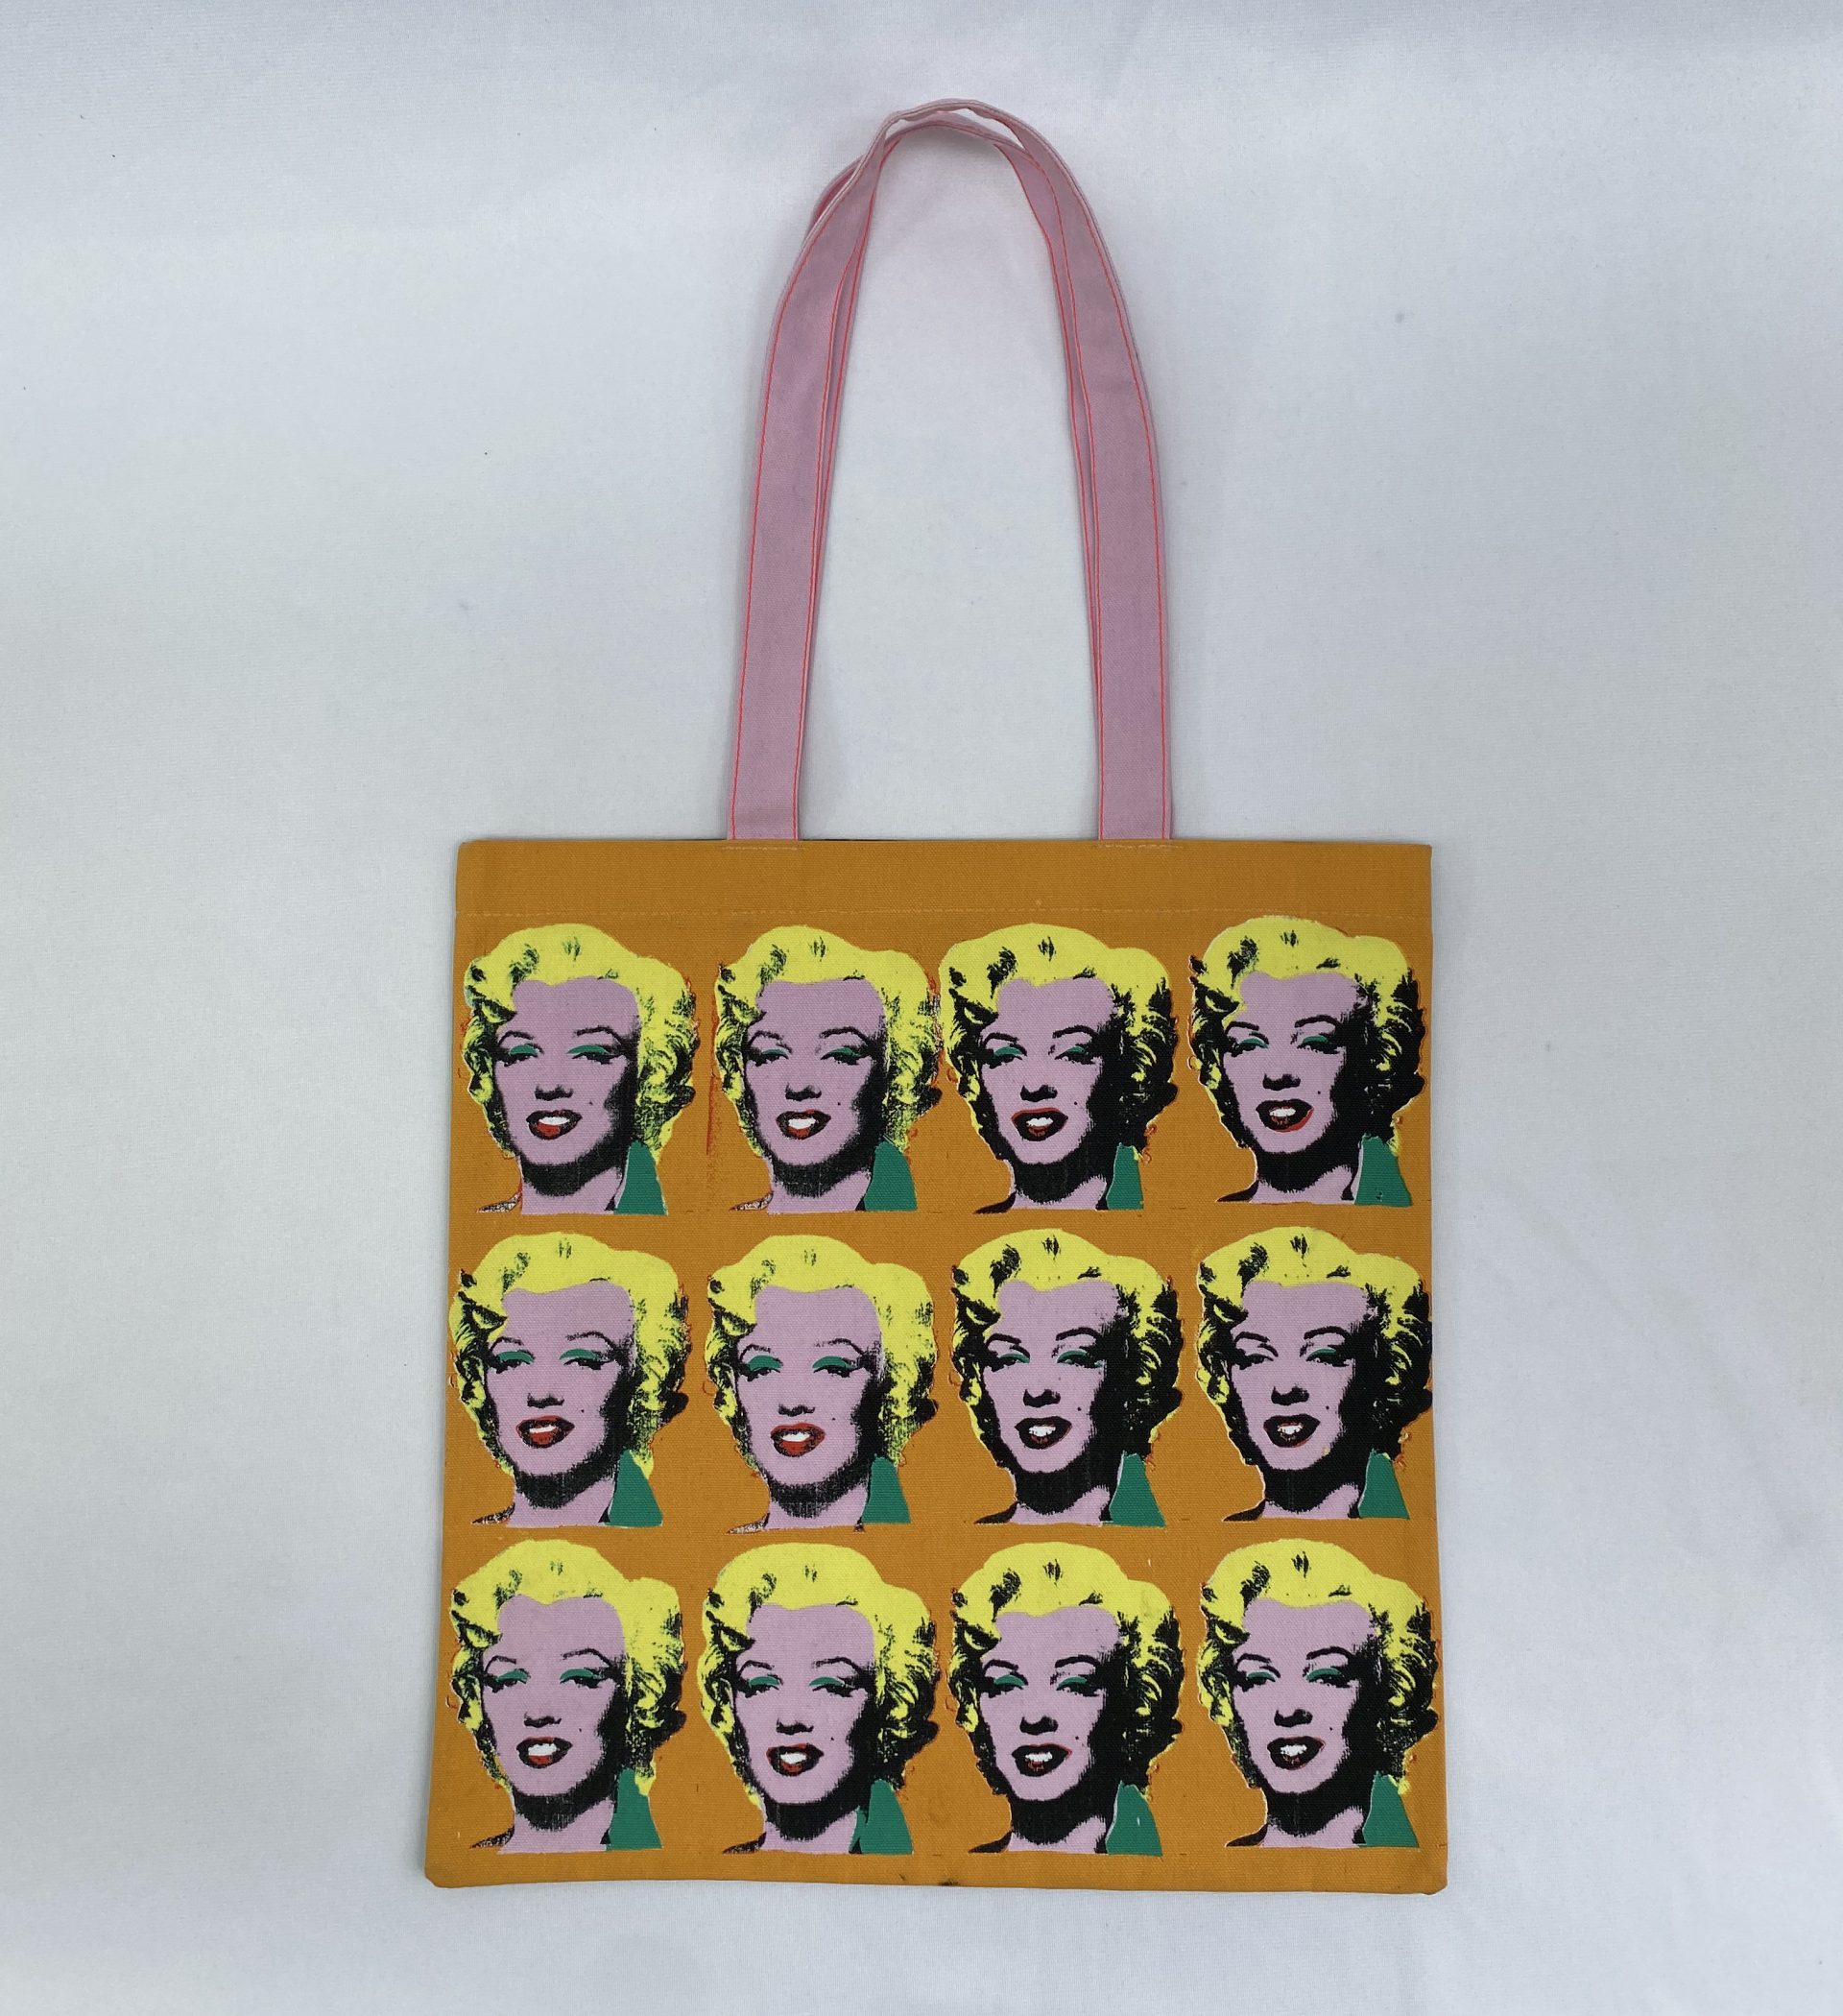 Tate Warhole printed tote bag